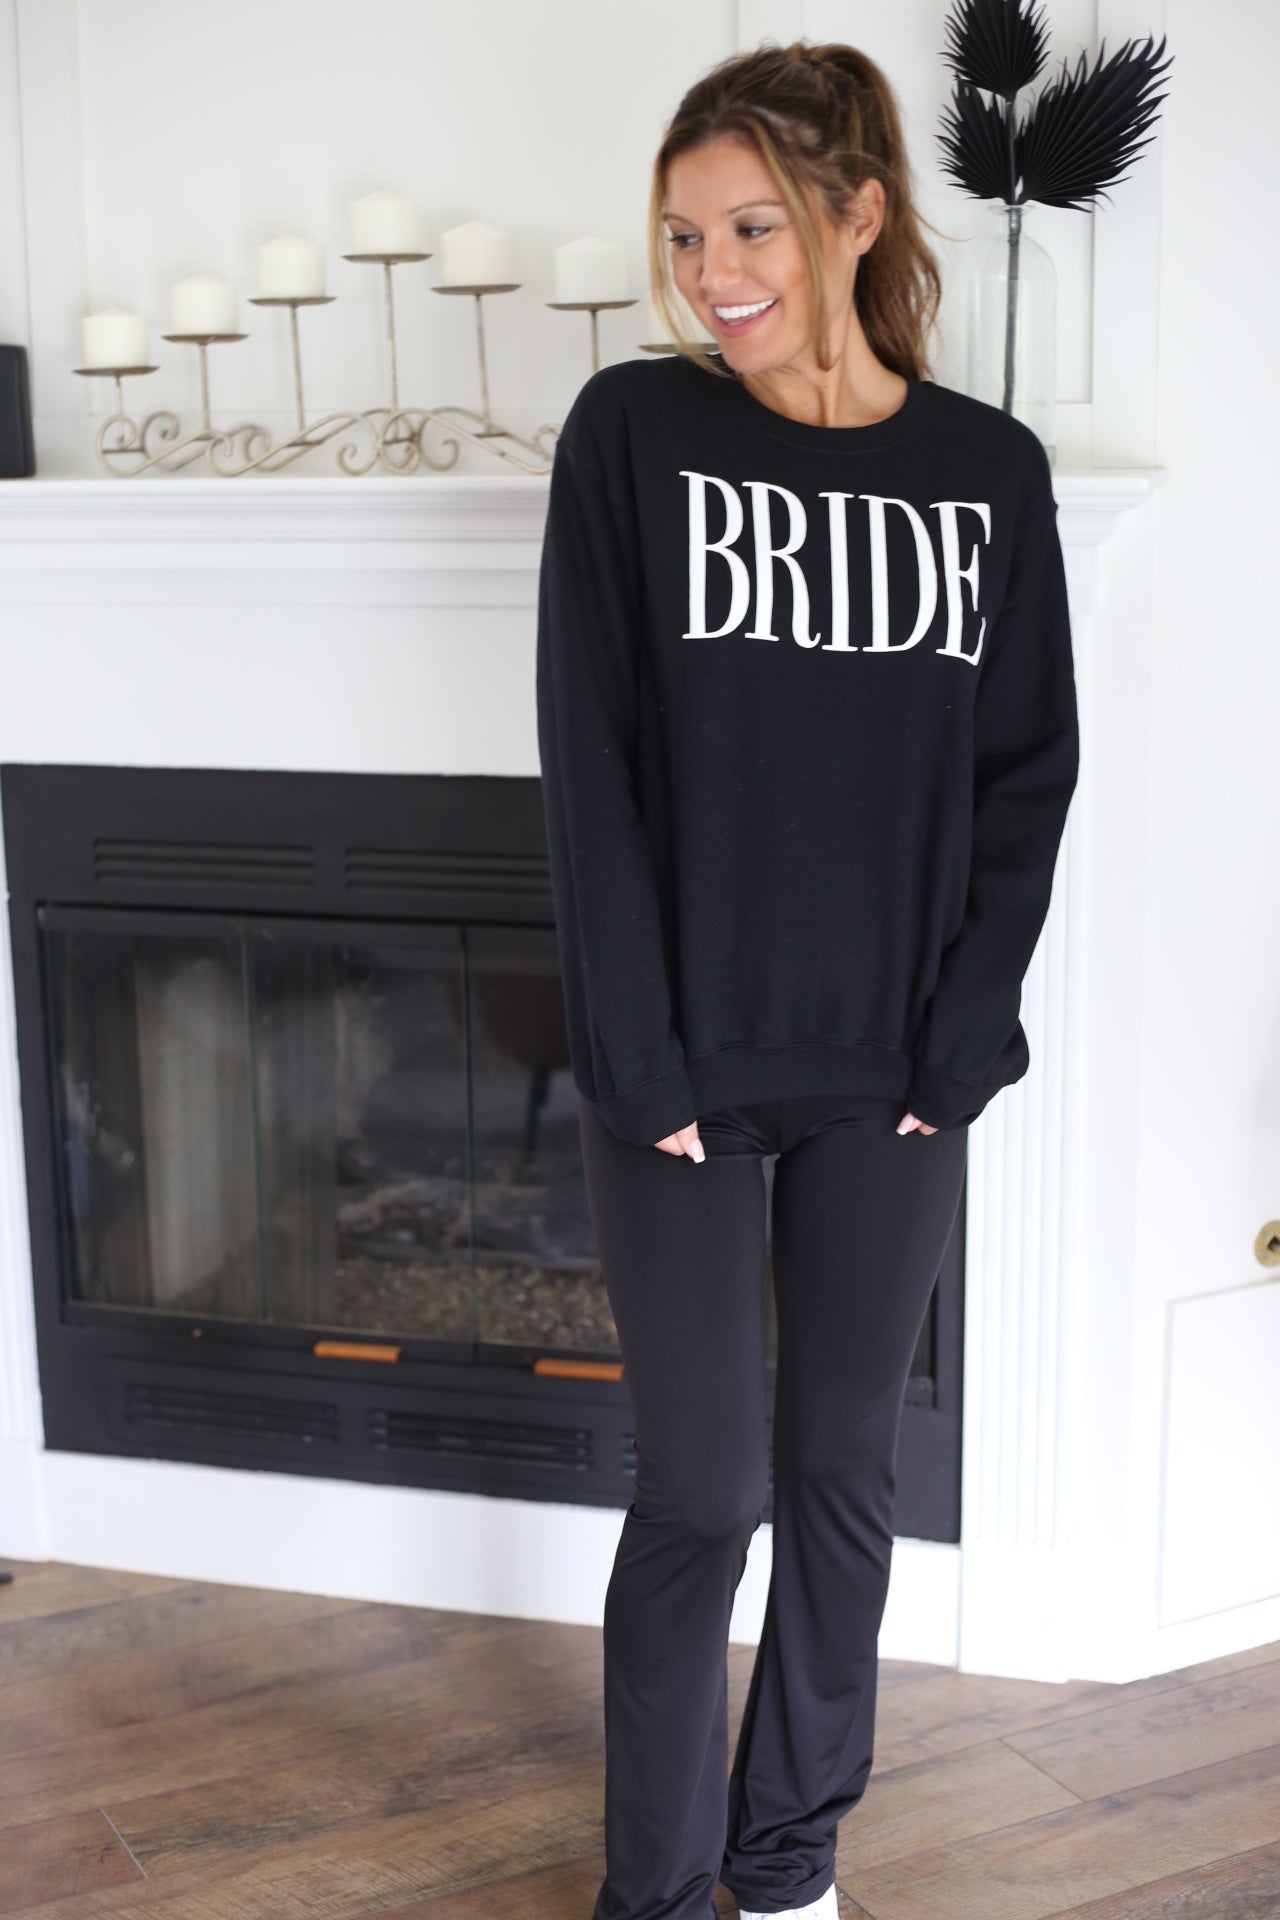 BRIDE Sweatshirt-Restocked